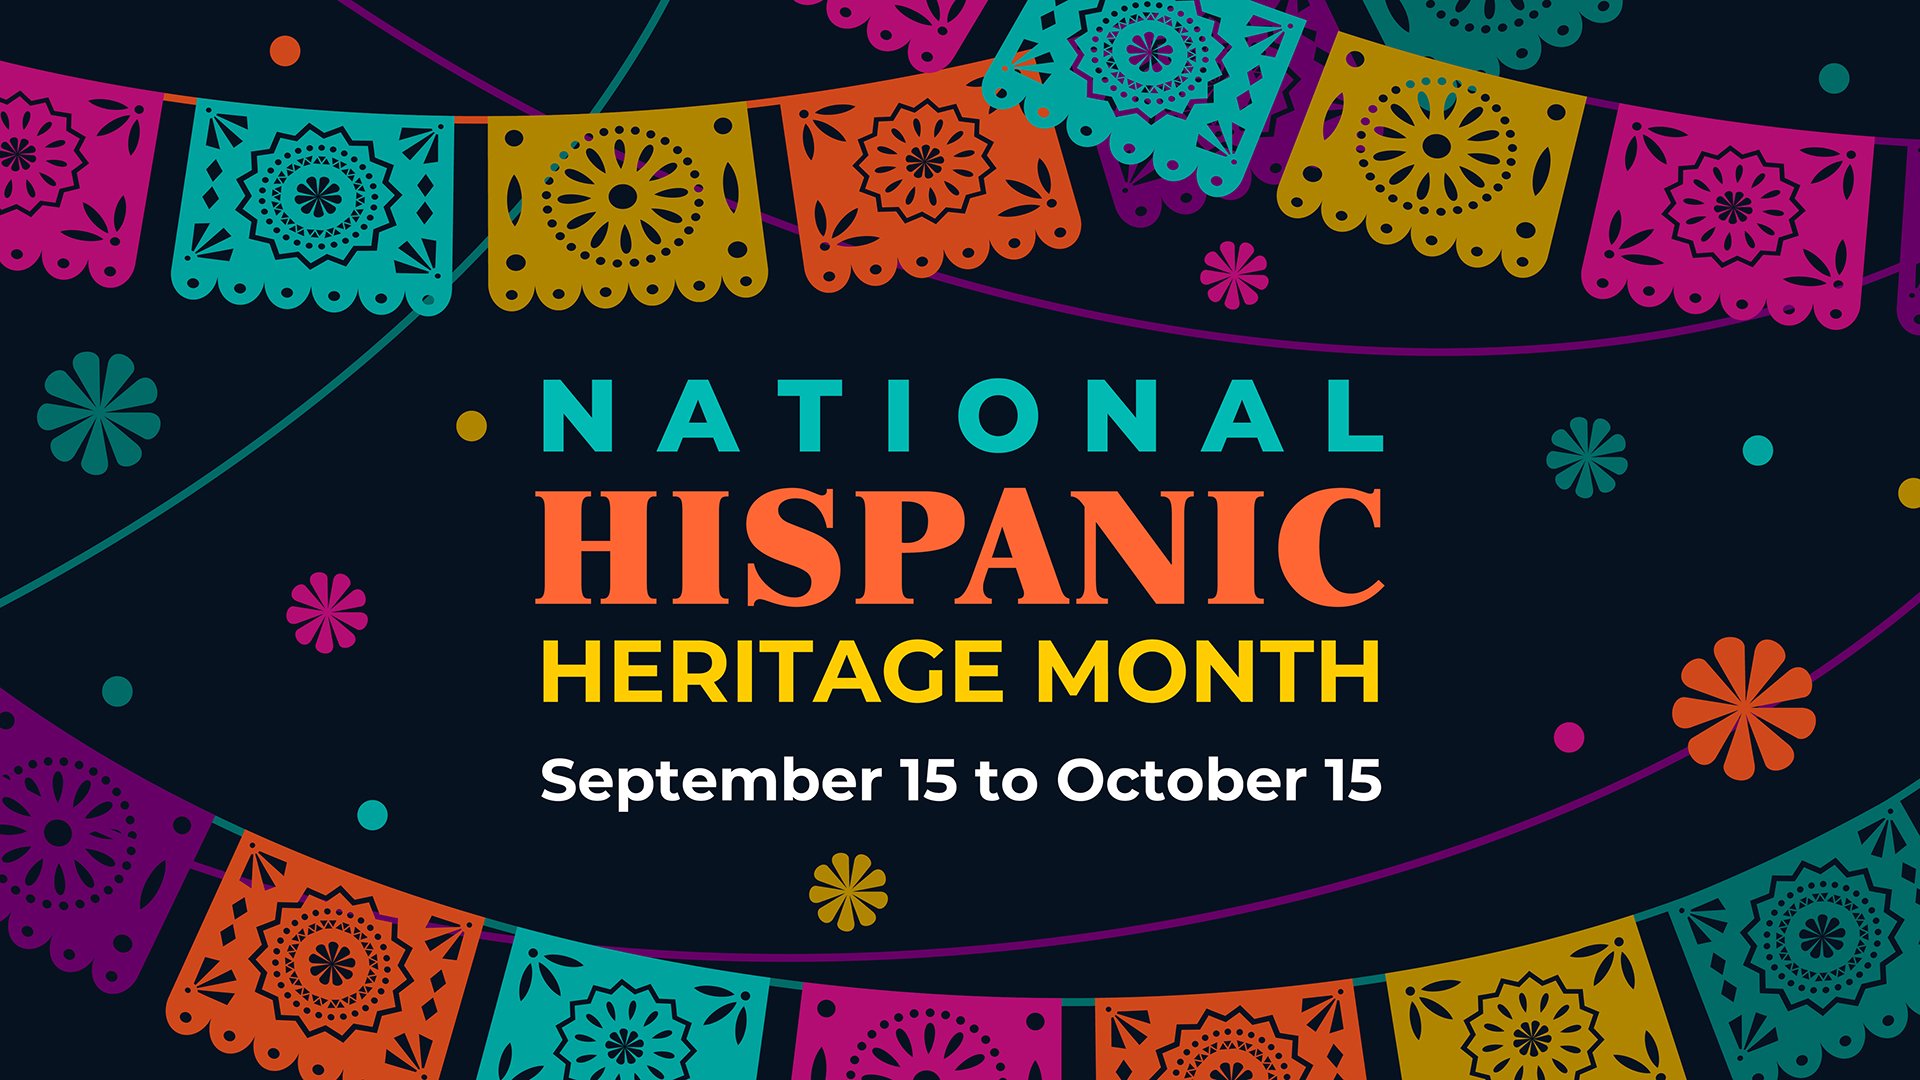 Banner for Hispanic Heritage Month September 15 to October 15